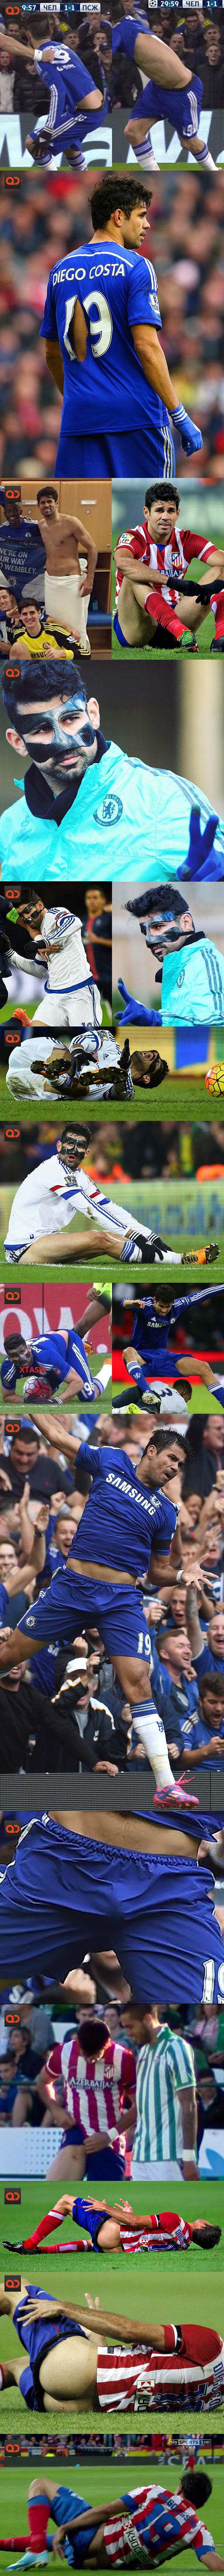 qc-spanish_footballer_diego_costa_bitting_opponent-collage03